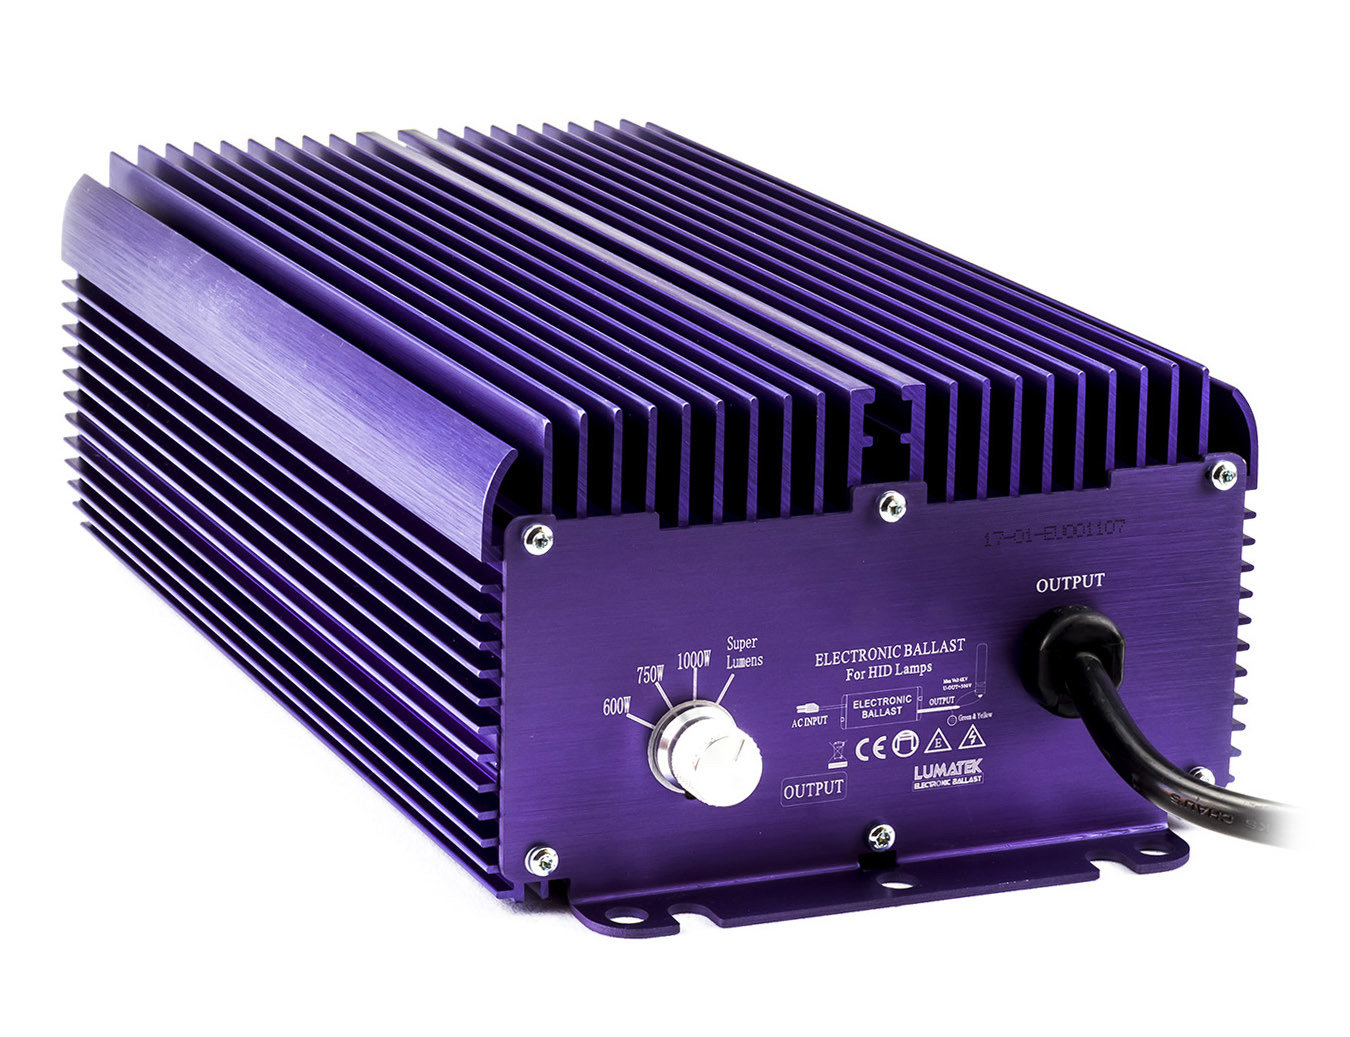 Балласт Lumatek 1000-600W для HPS (ДНАТ) и MH (МГЛ) ламп